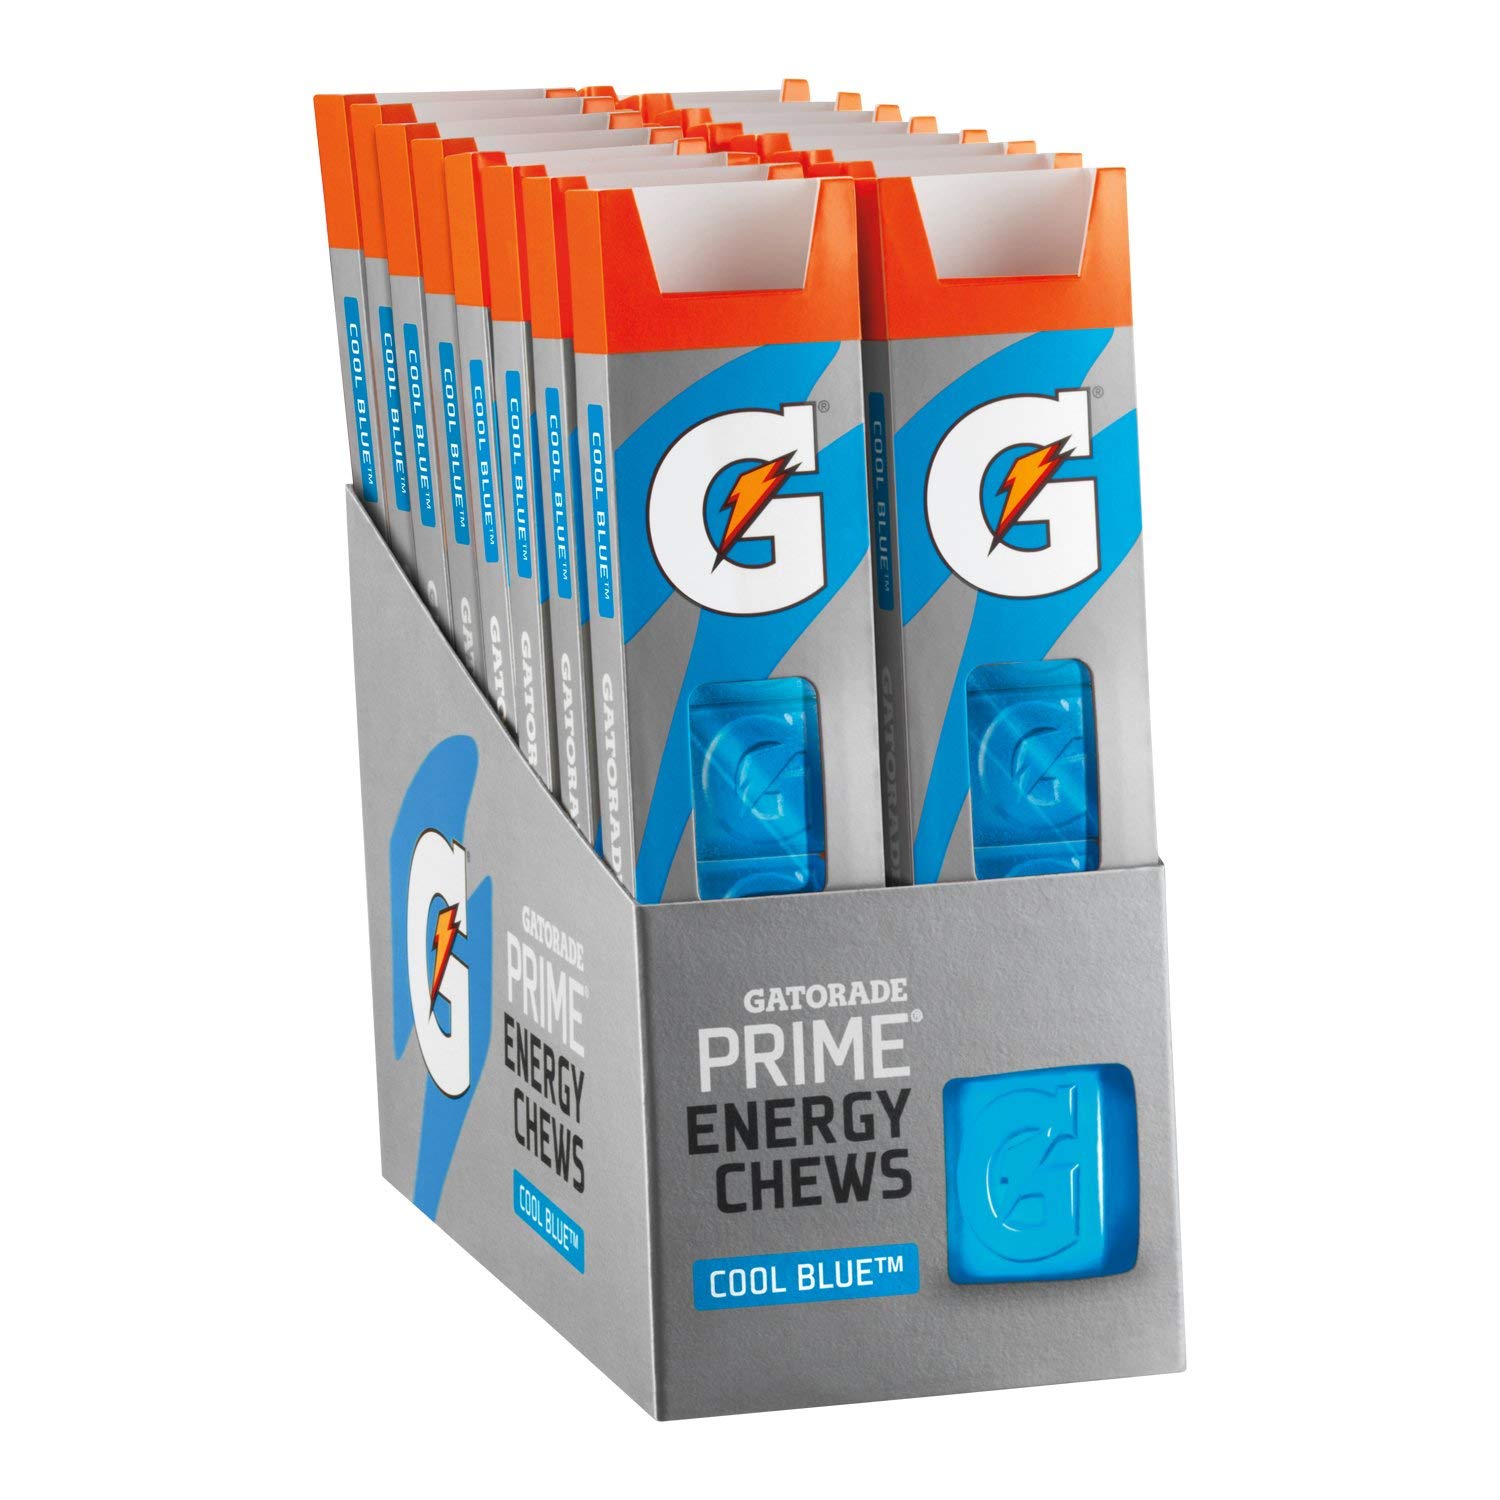 Gatorade Prime Energy Chews cool blue